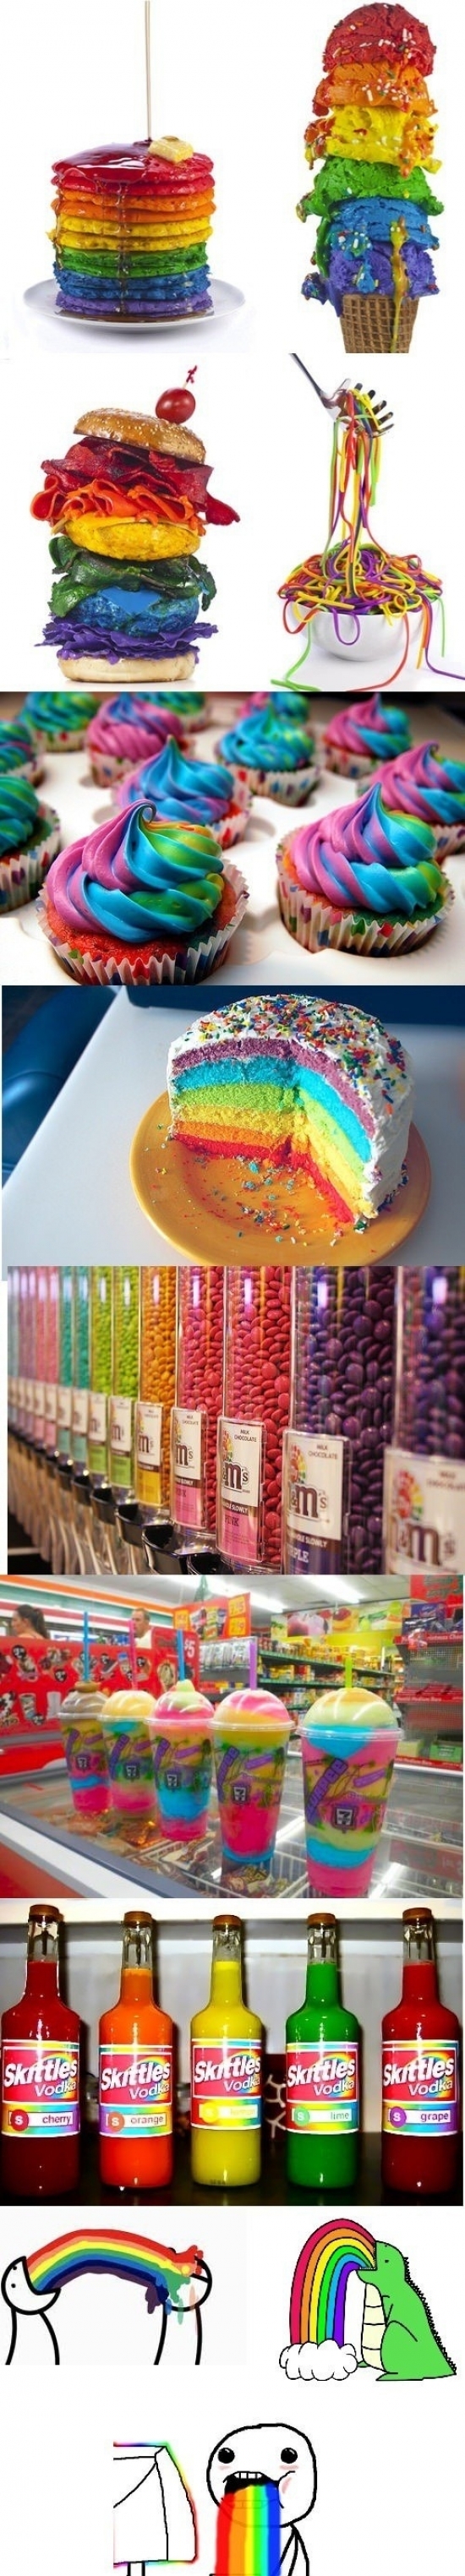 Puke_rainbows - ¿Habéis visto alguna vez algo mas colorido?